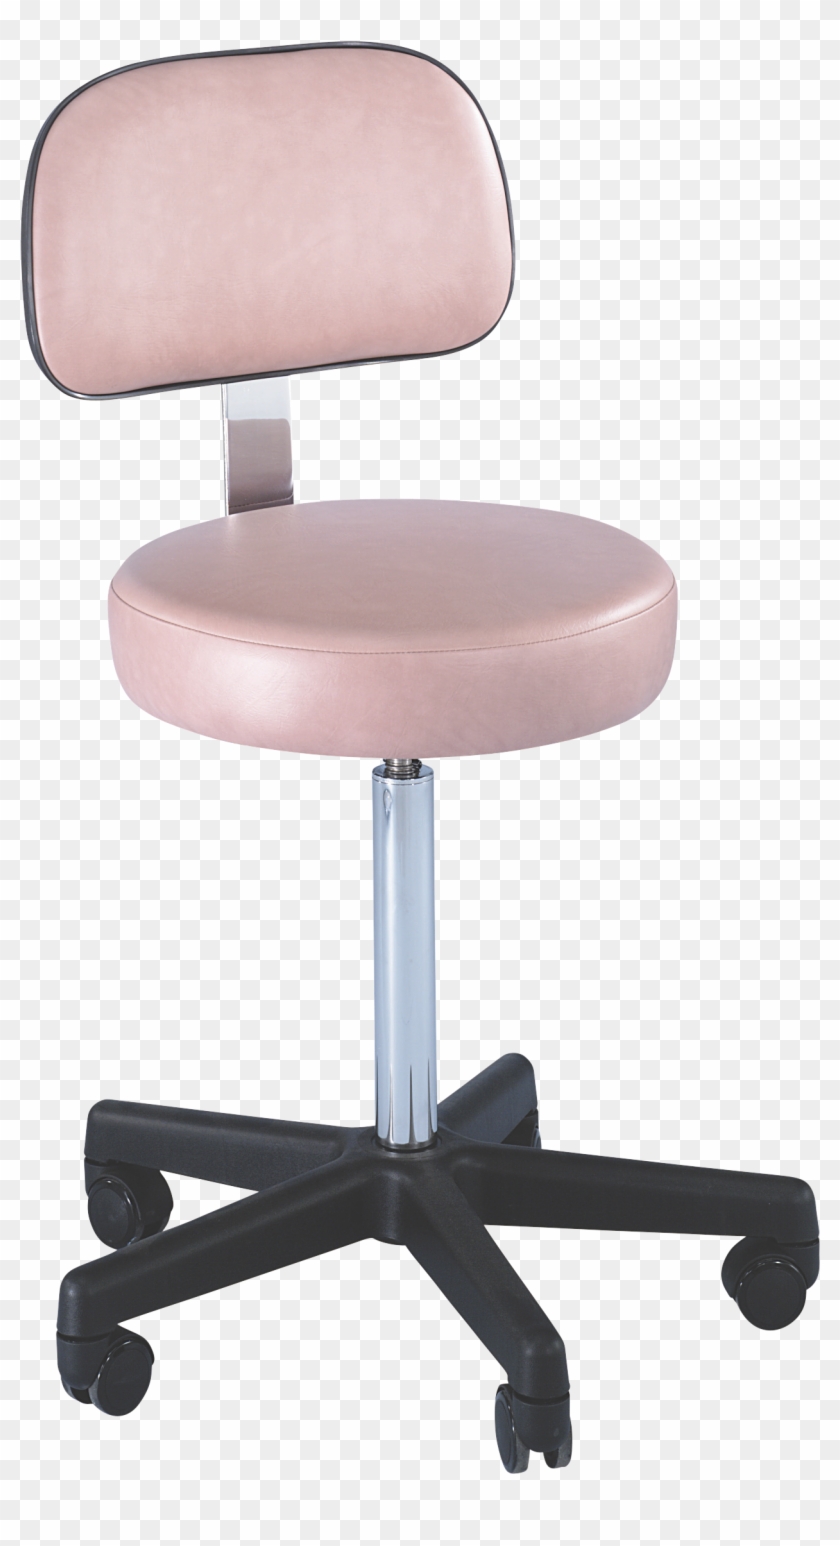 5-leg Adjustable Exam Stool - Office Chair Clipart #3376257